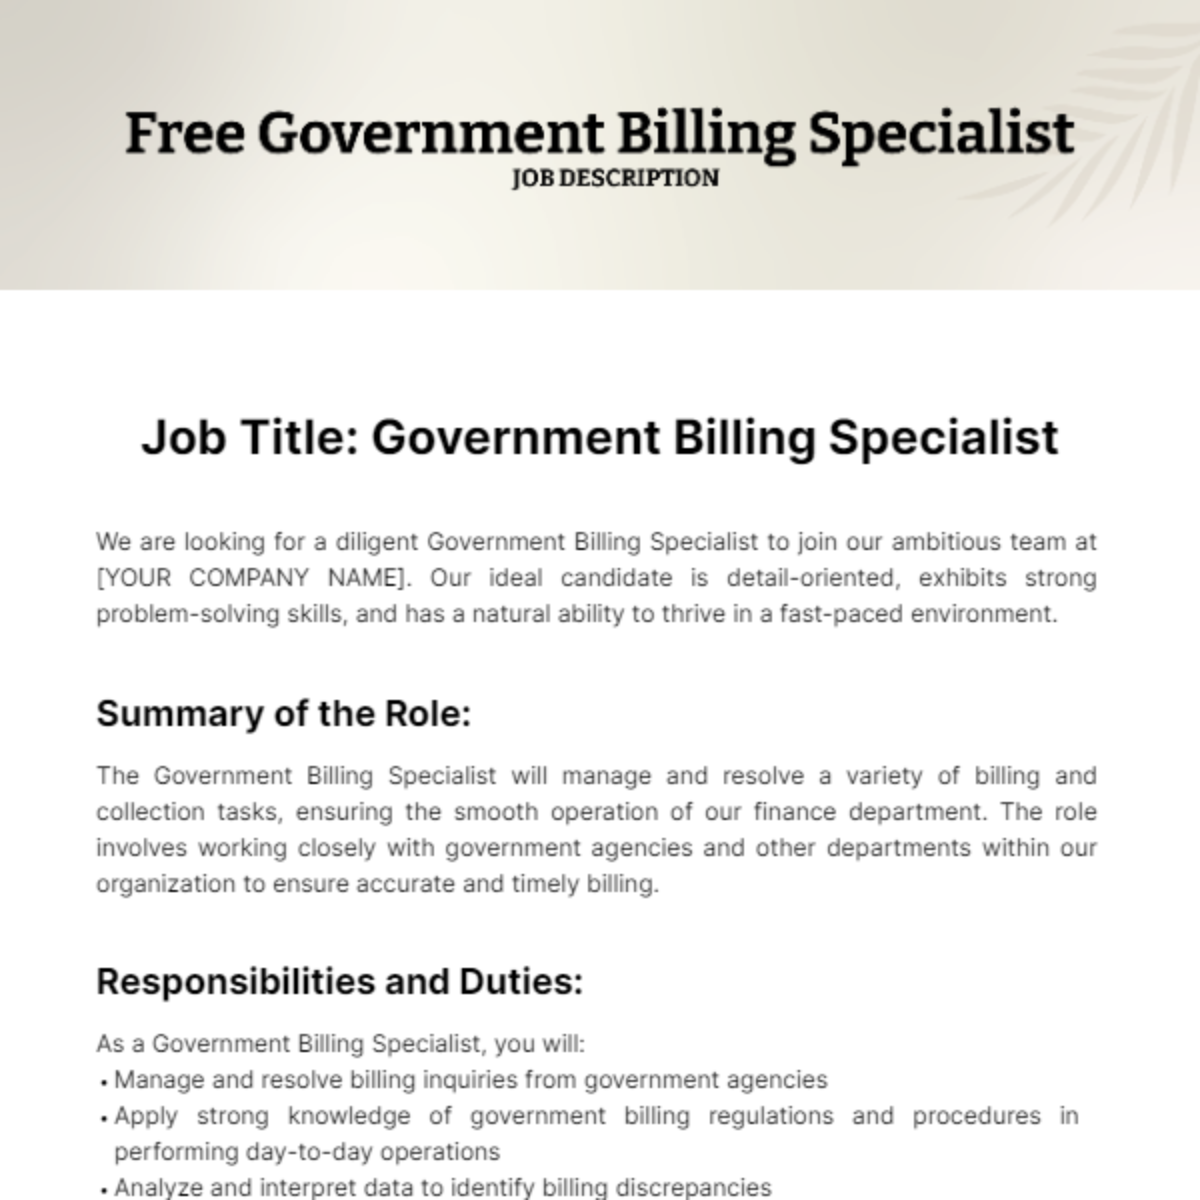 Free Government Billing Specialist Job Description Template